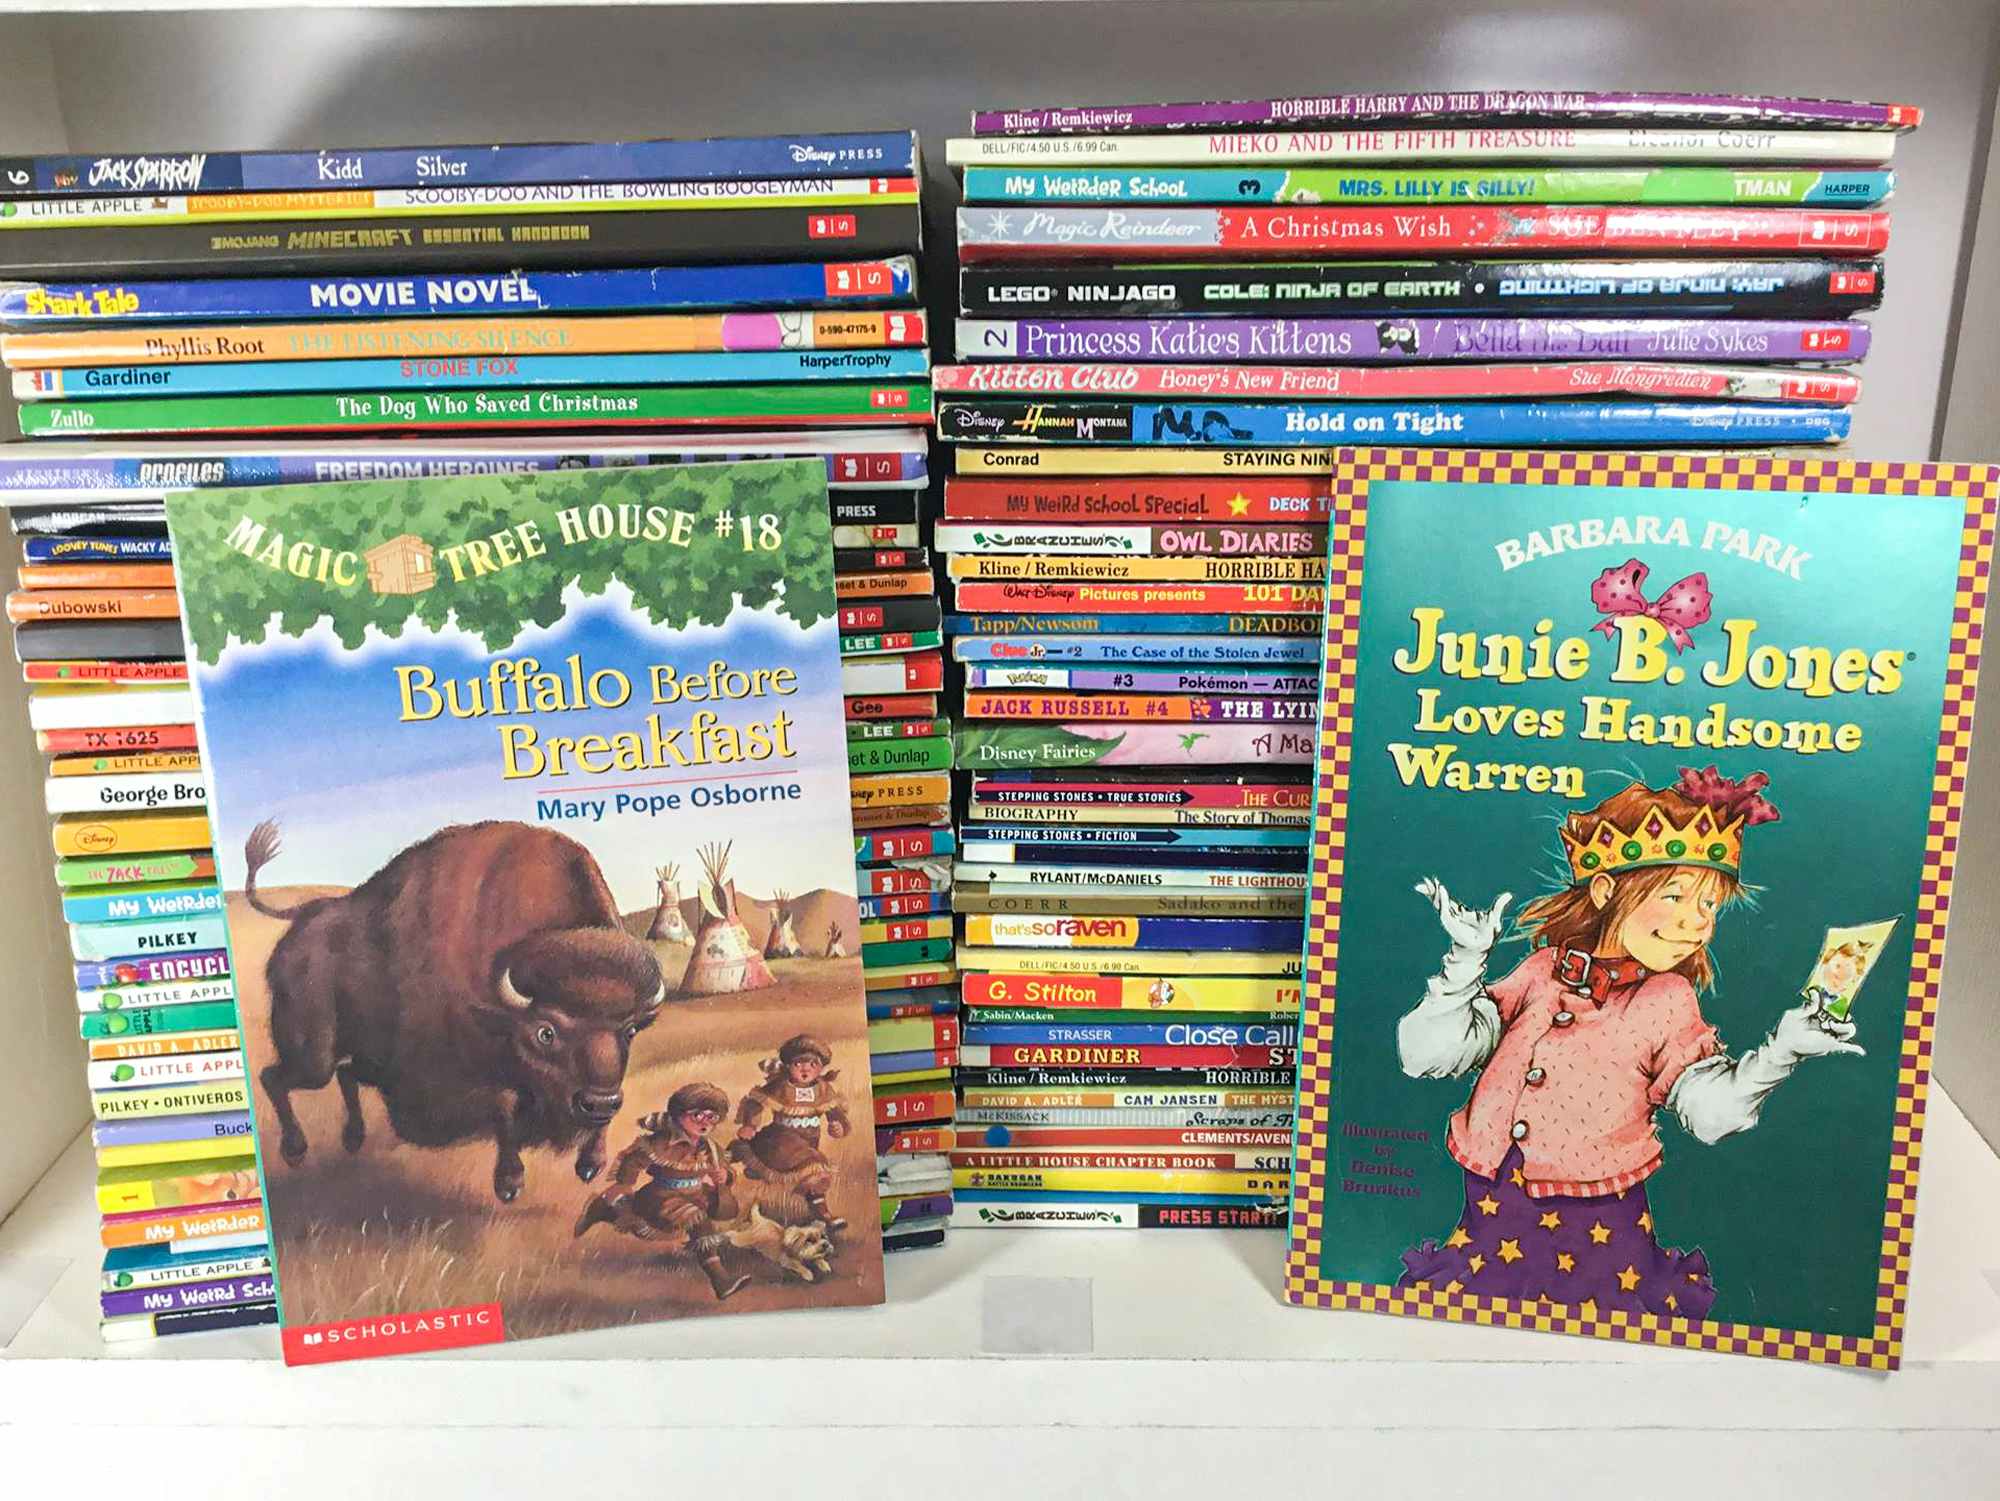 Best Book Gifts for Kids - Shop Children's Book Bundle Discounts